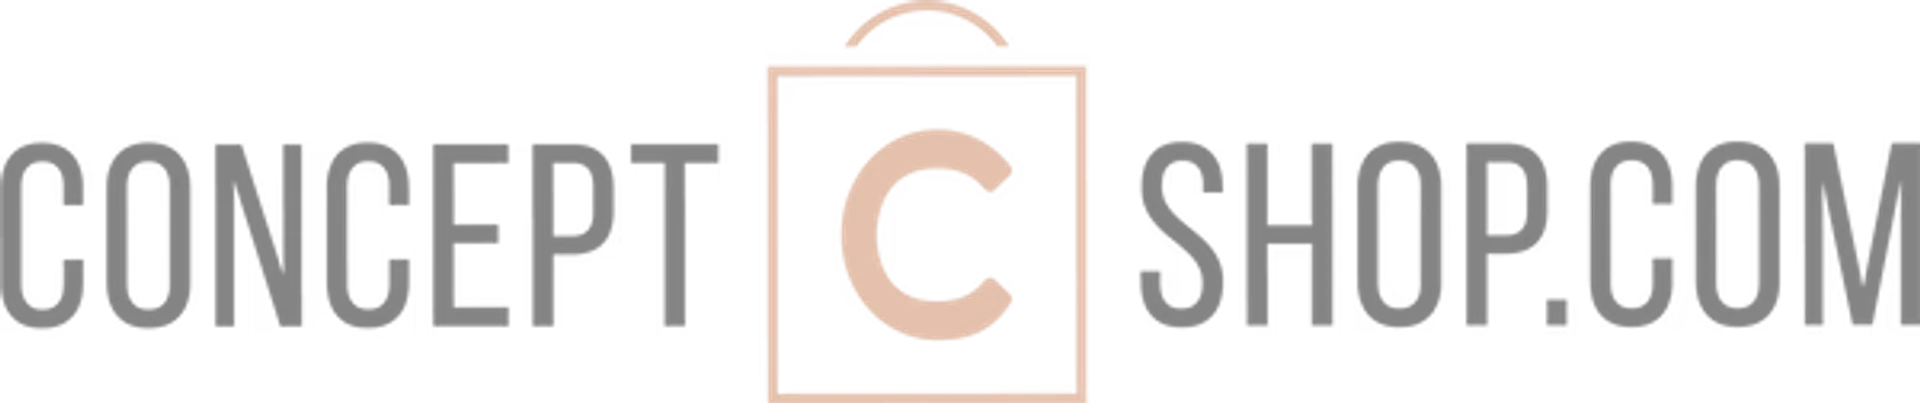 CONEPT C SHOP logo de circulaires